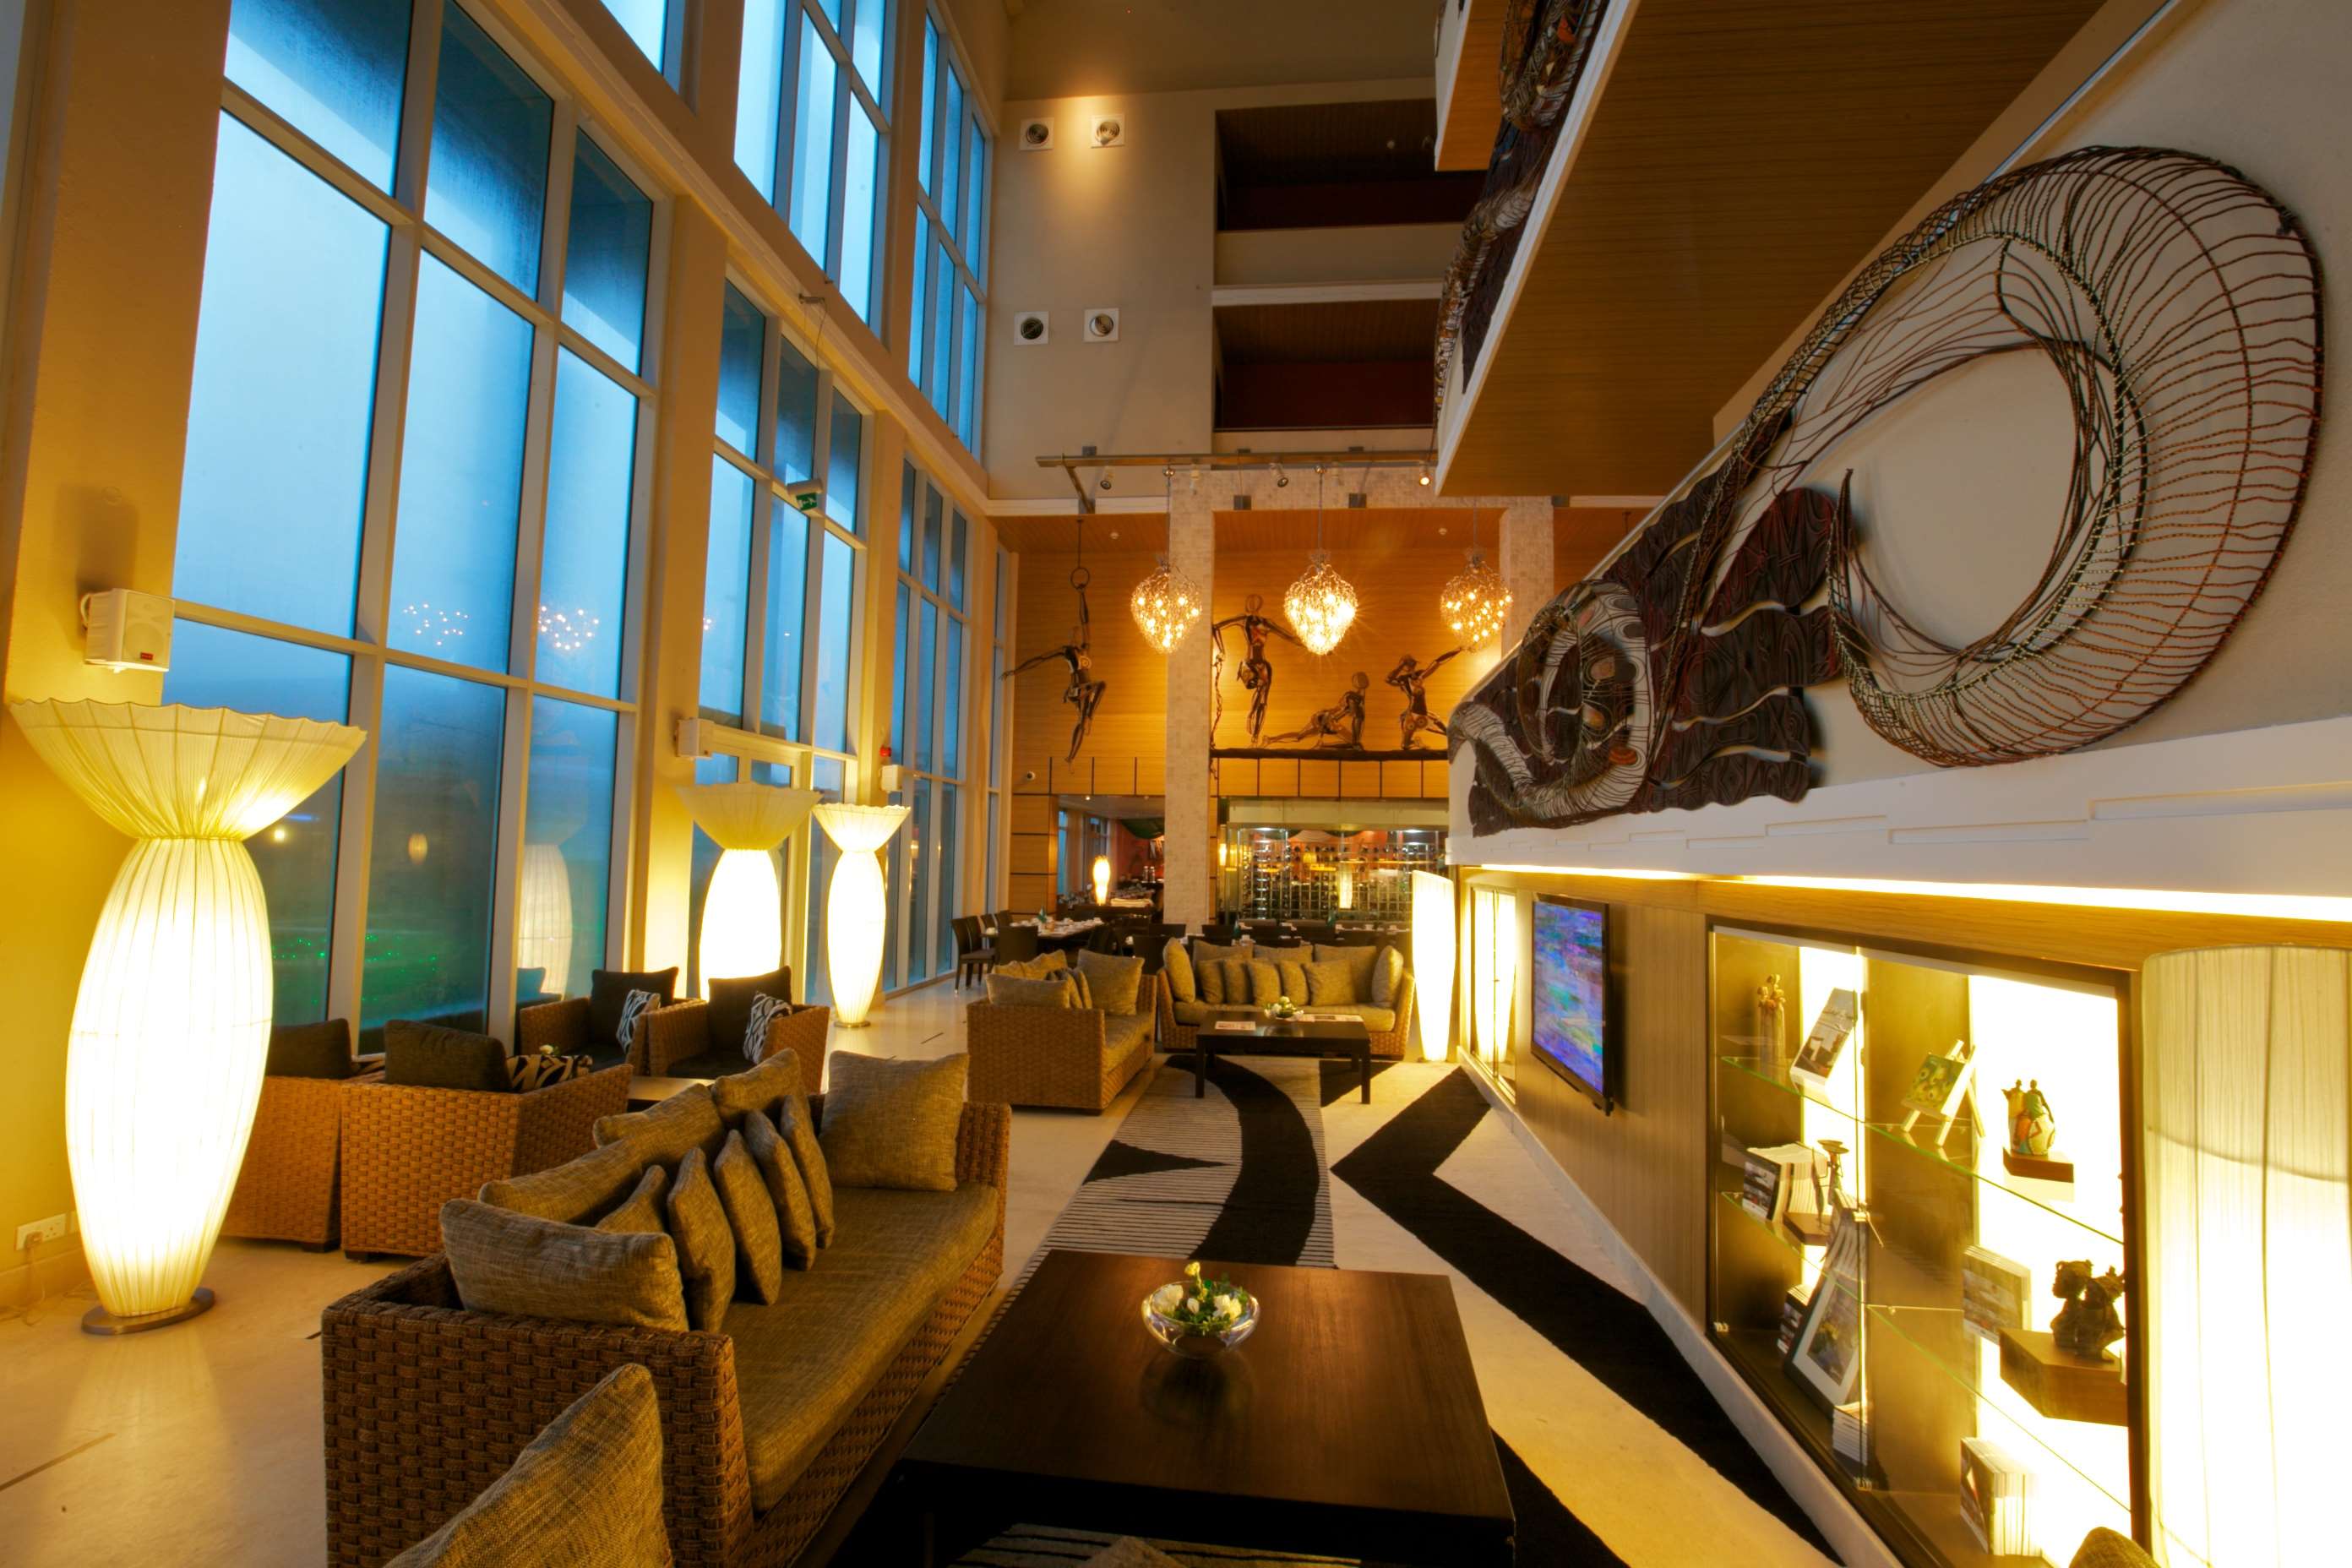 Fotos - Radisson Blu Anchorage Hotel, Lagos, V.I. - 22